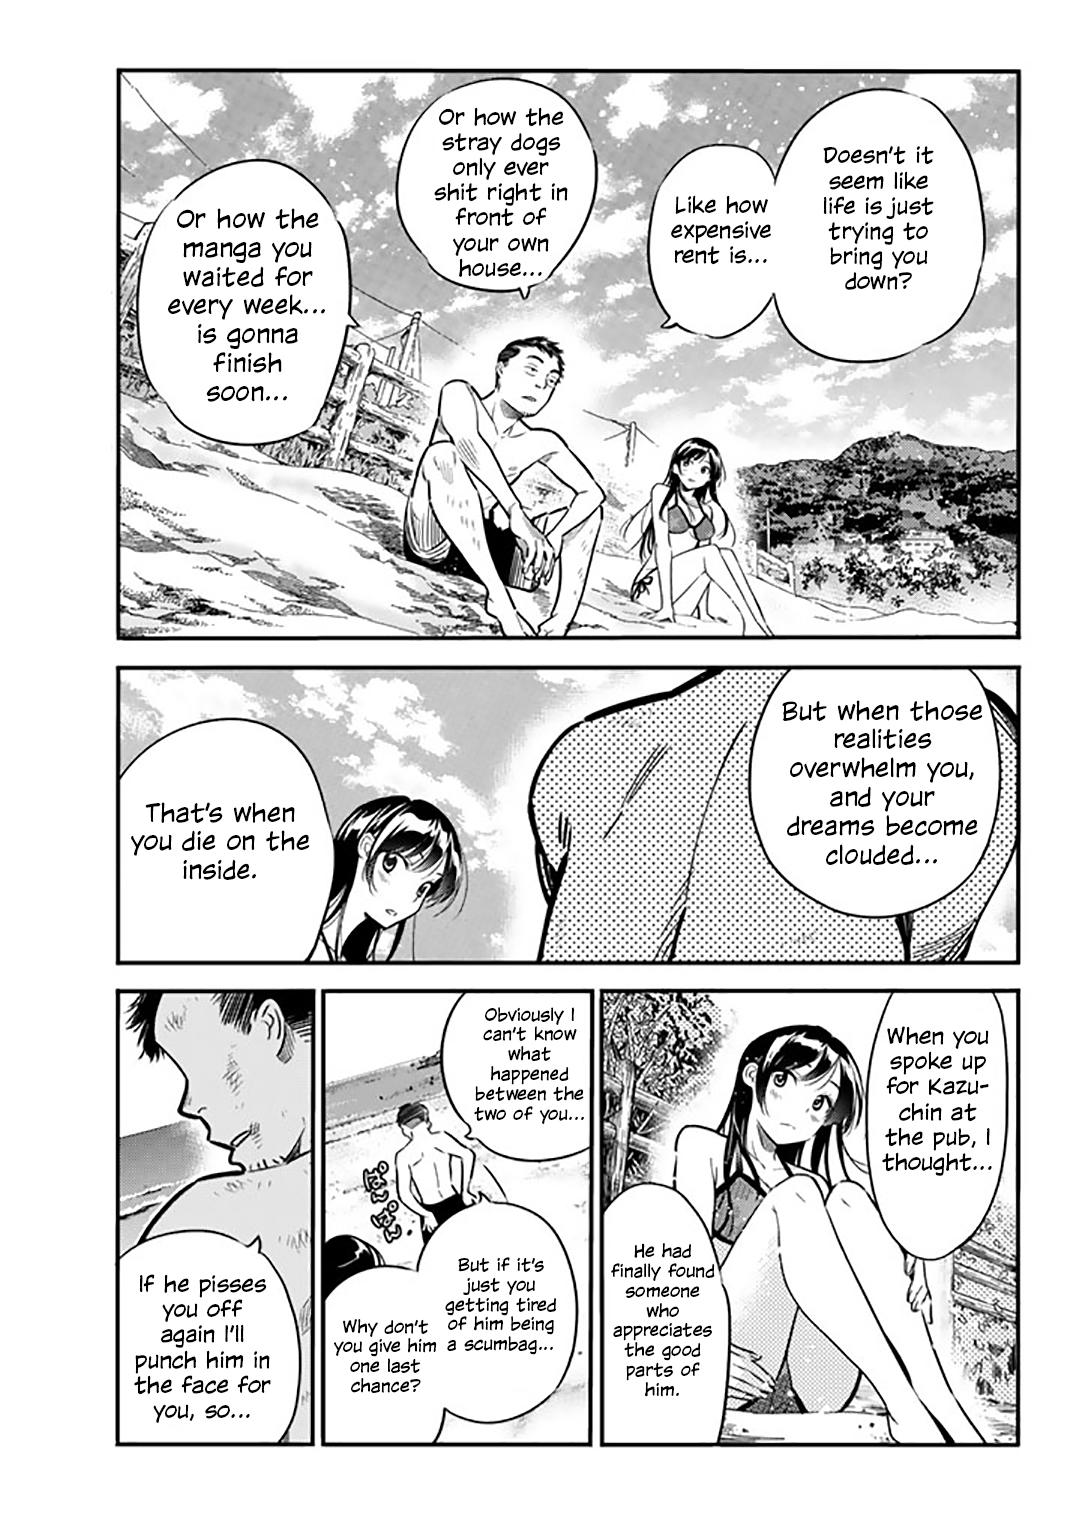 Read Kanojo, Okarishimasu Manga Chapter 271 in English Free Online